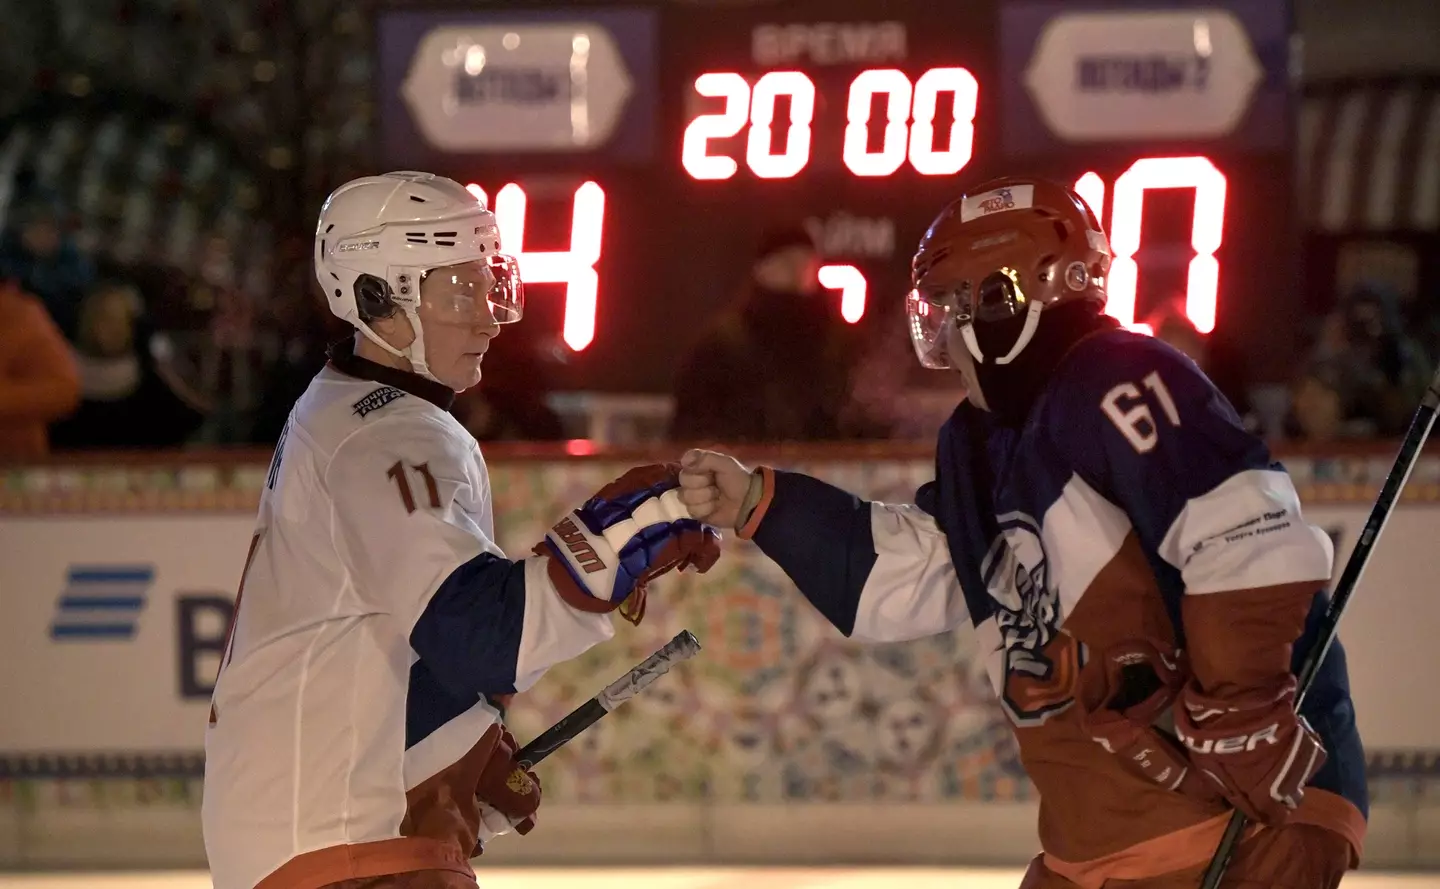 Putin and Potanin during an ice hockey tournament.